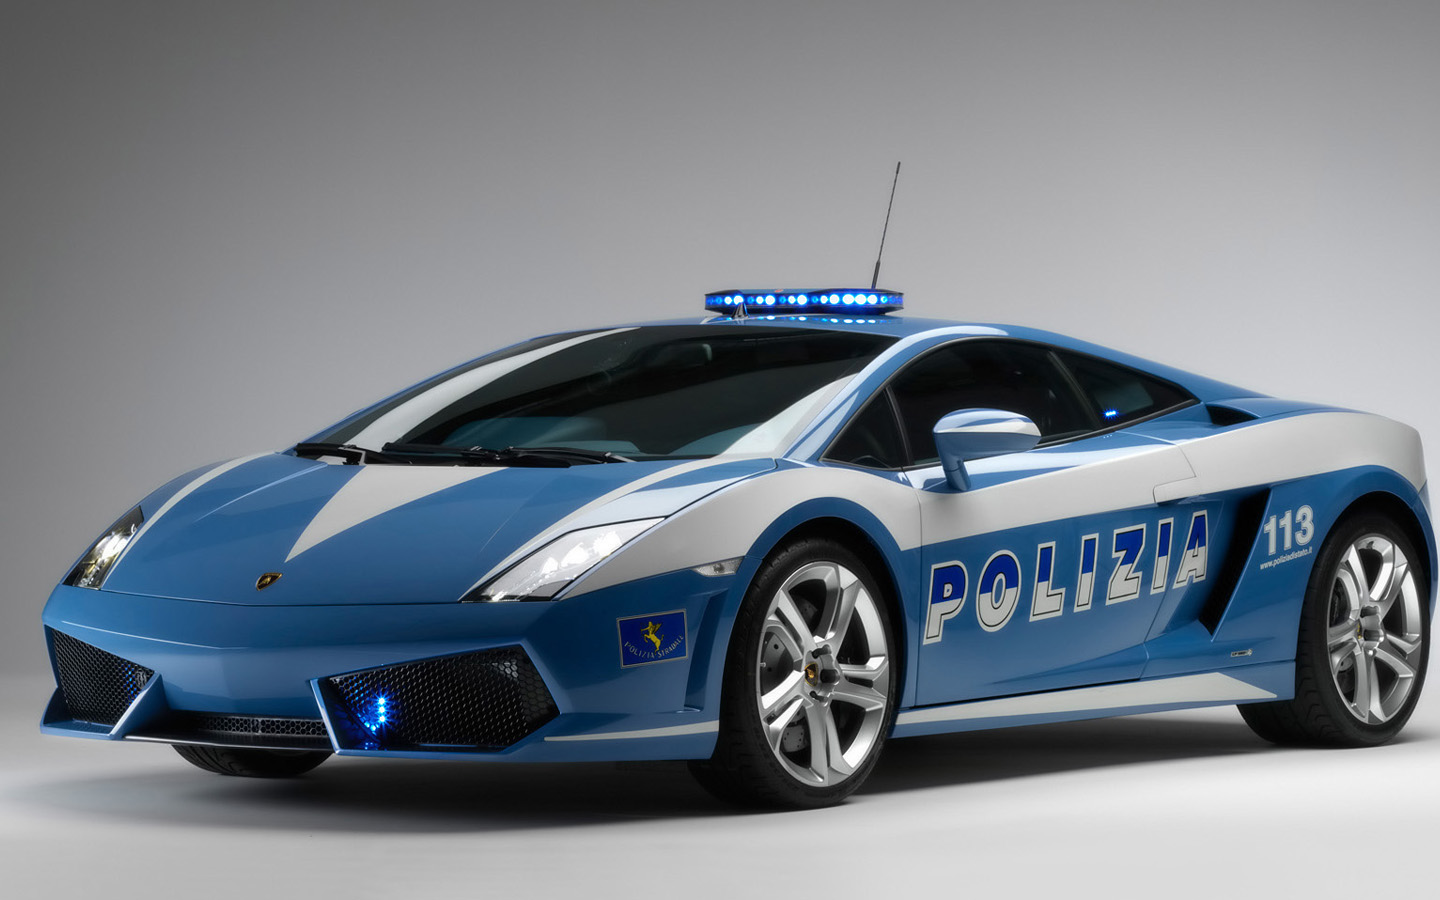 Lamborghini Gallardo Lp Police Car Wide Image At Clker